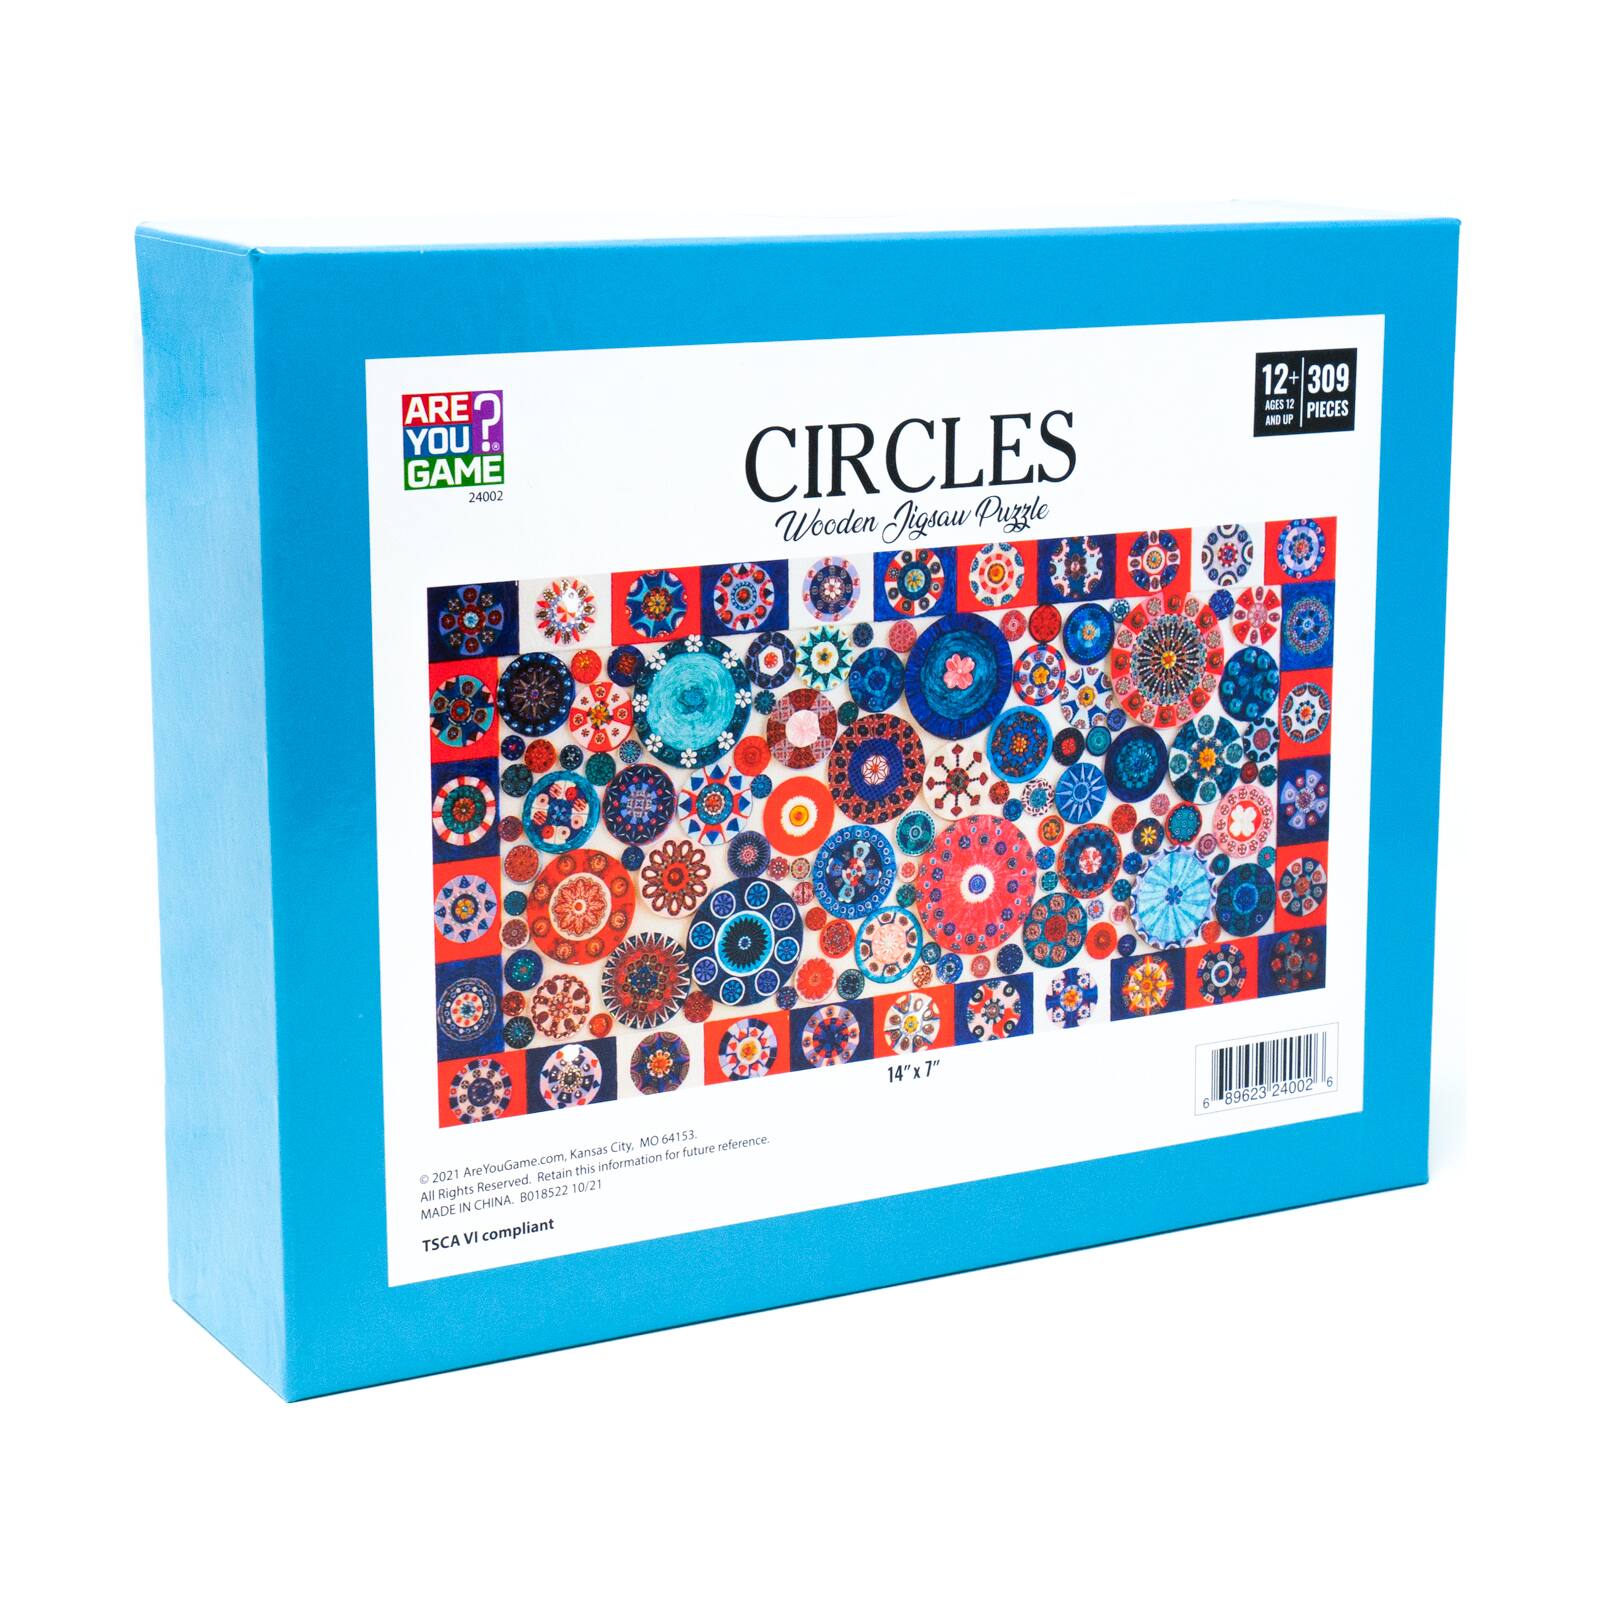 Wooden Jigsaw Puzzle - Circles: 309 Pcs